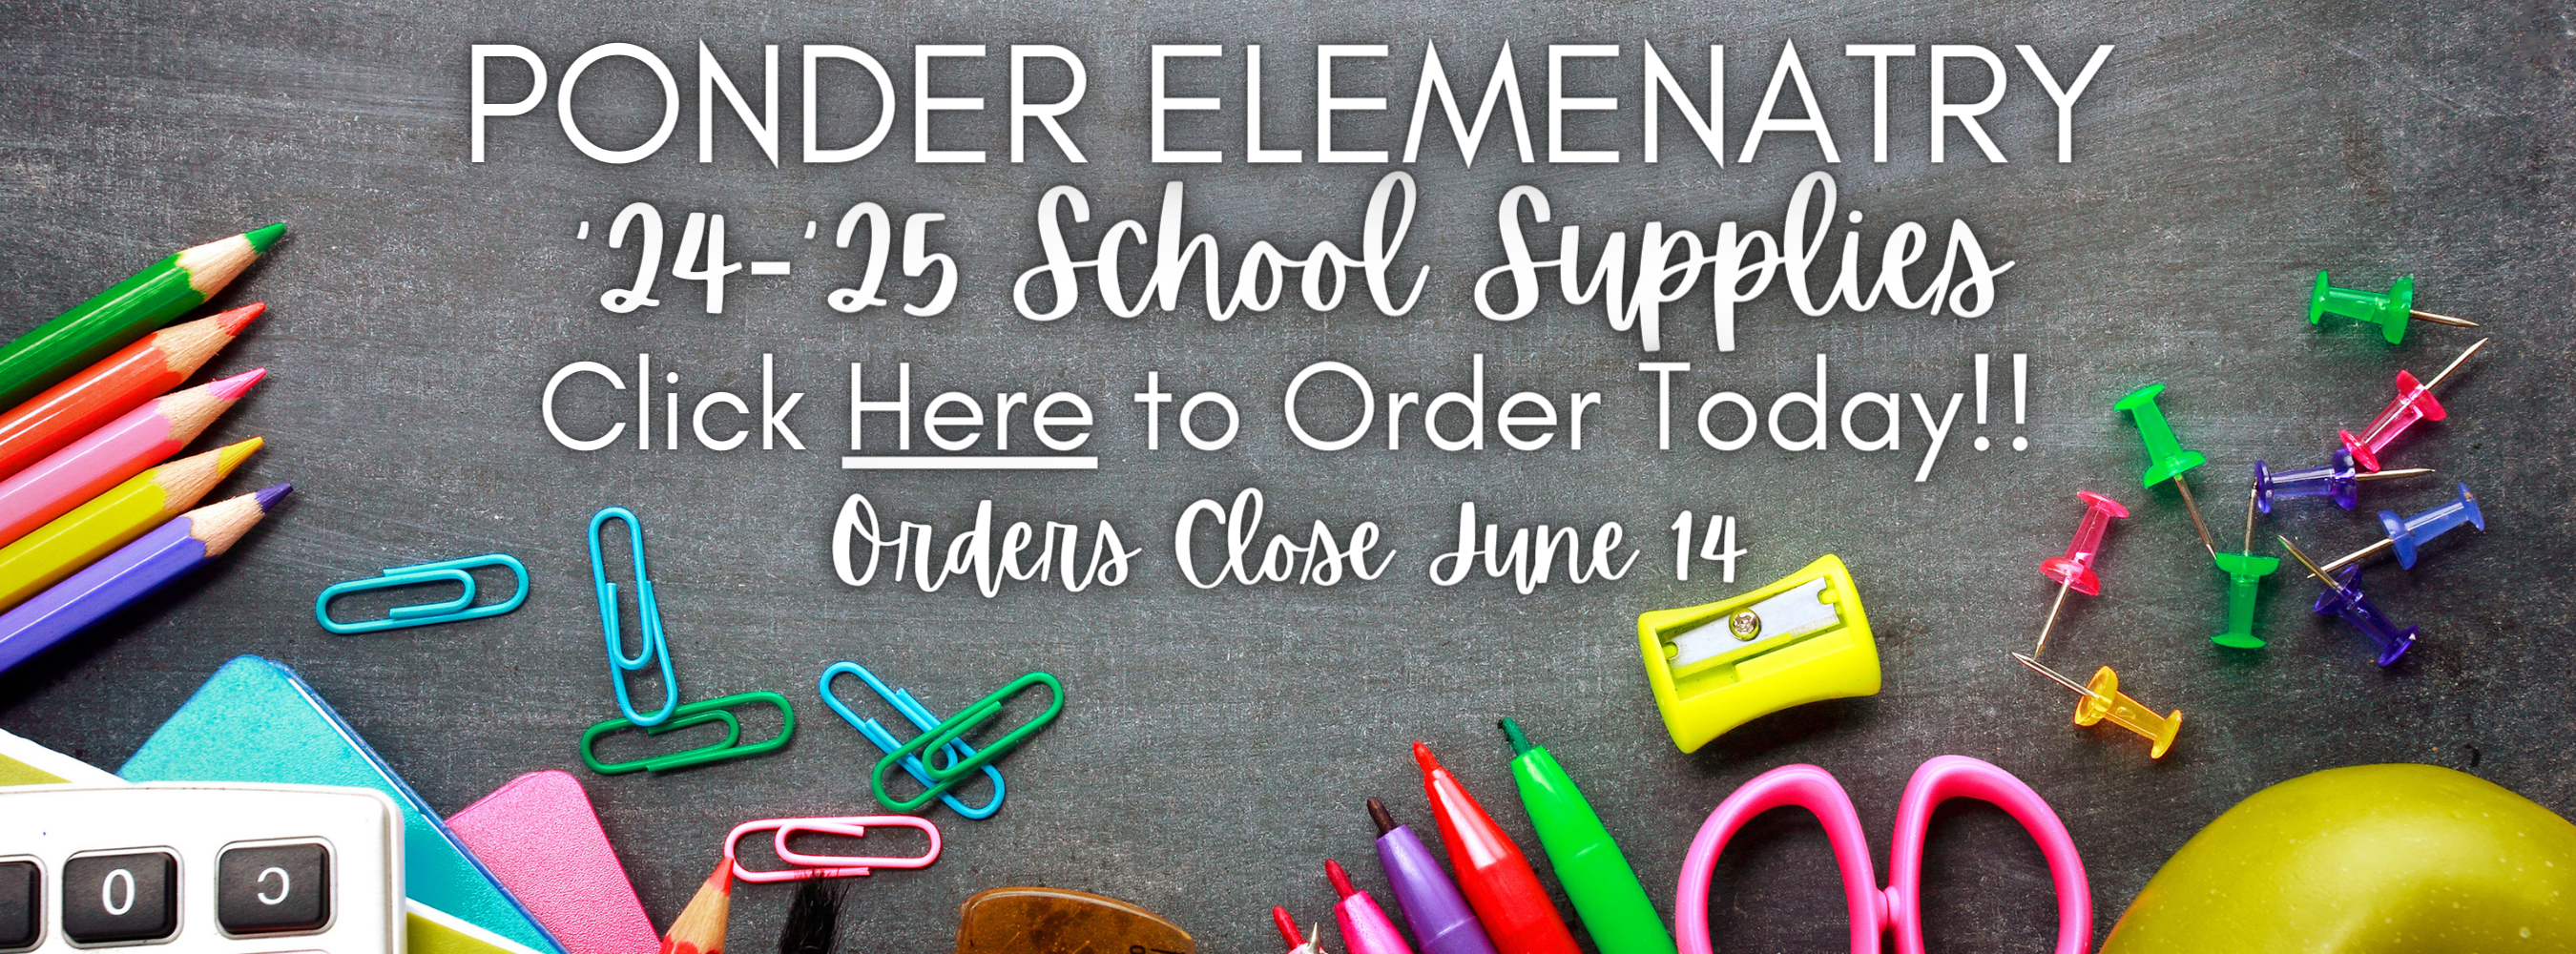 PES School Supply Order